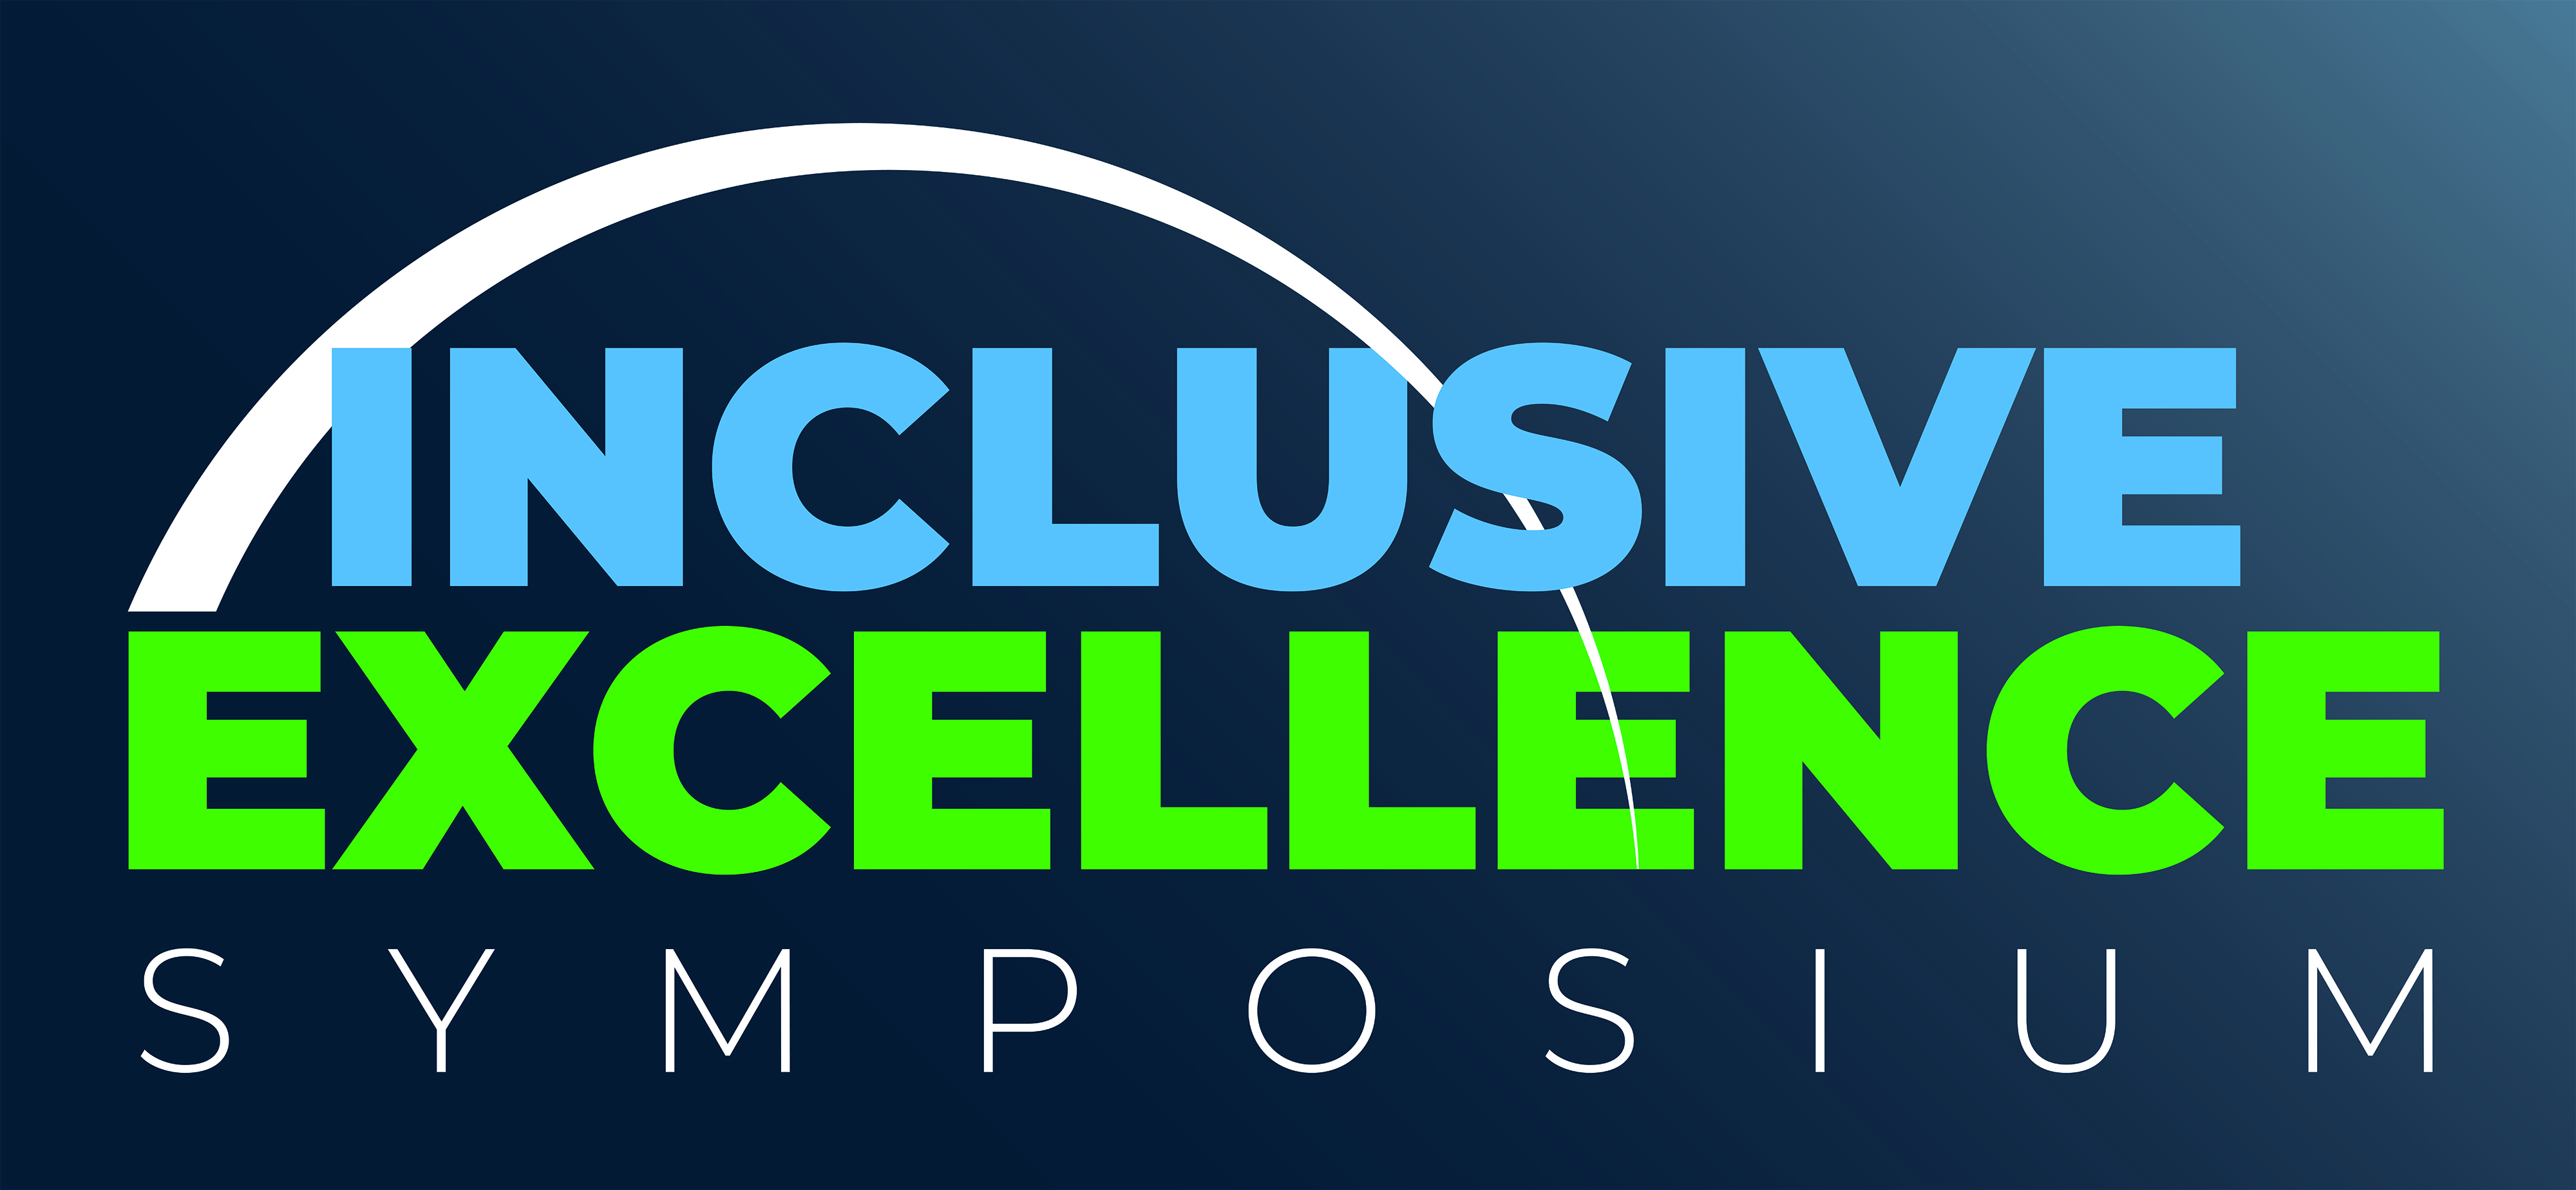 Inclusive Excellence Symposium